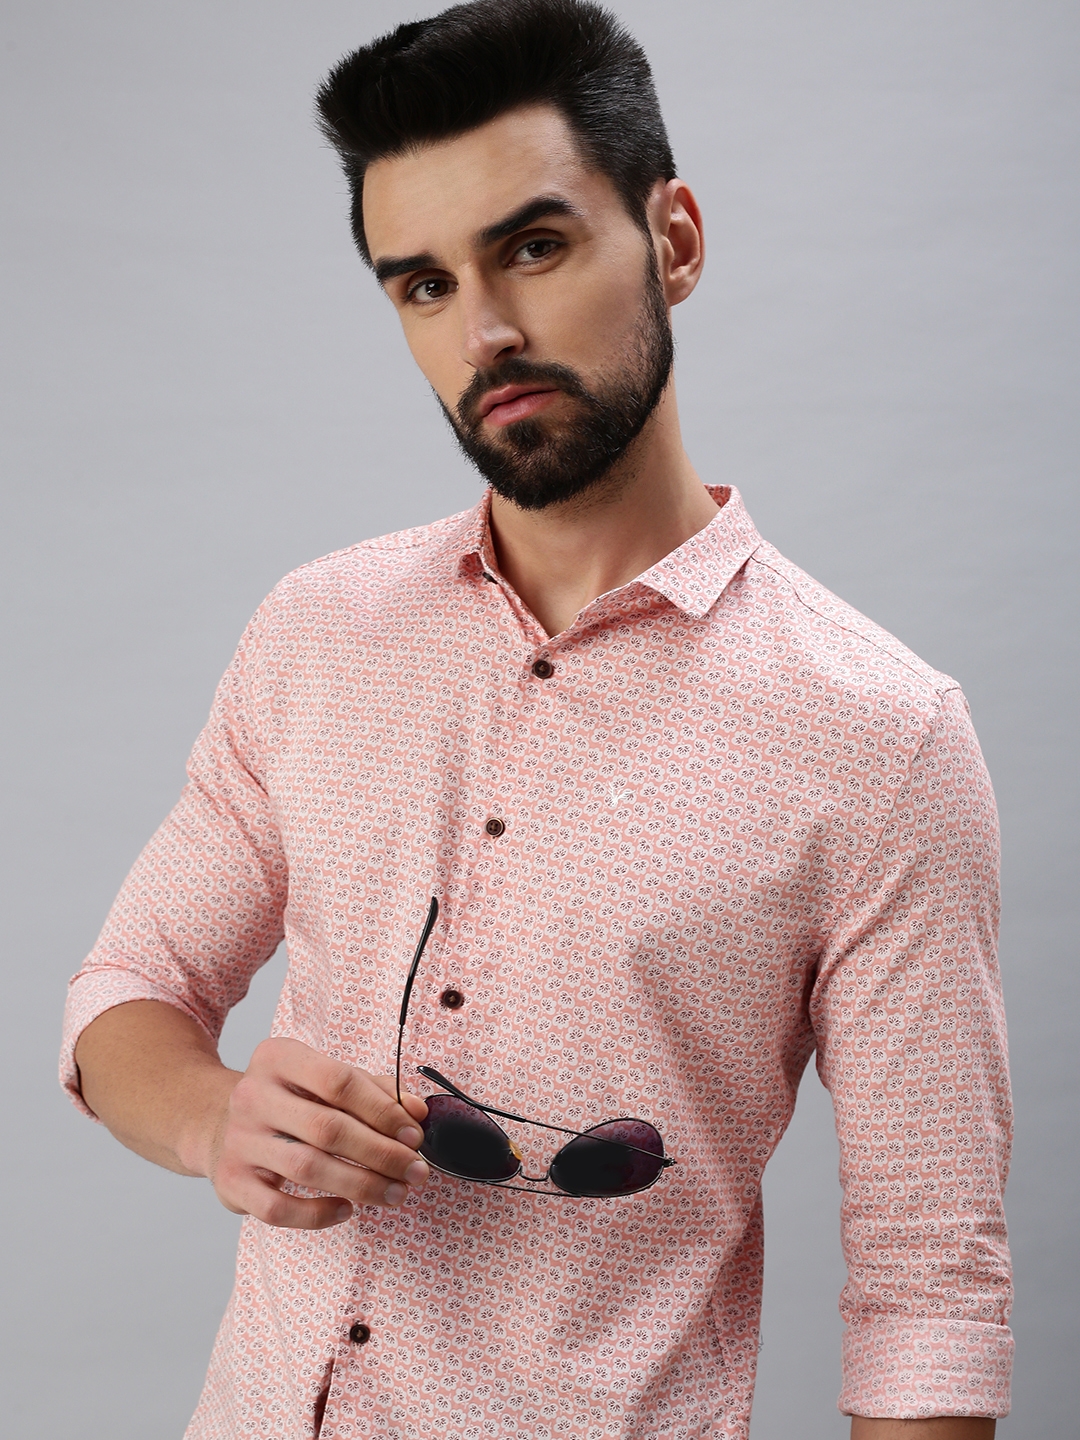 Men's Pink Cotton Printed Casual Shirts